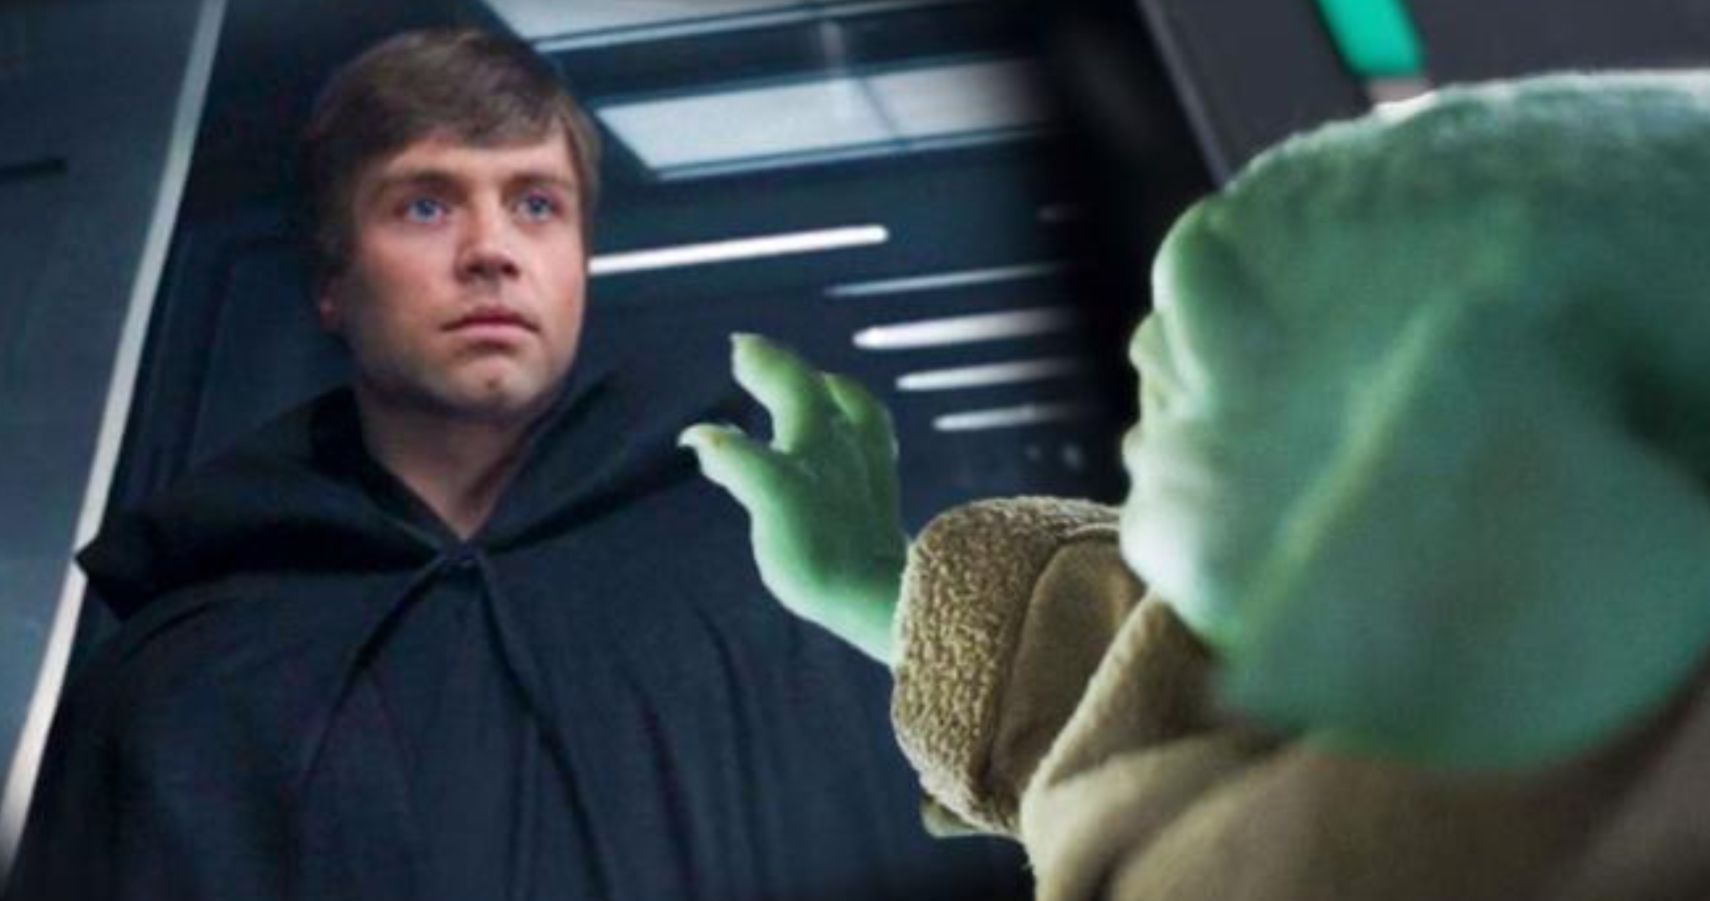 The Mandalorian Deepfake YouTuber Who Fixed Luke Skywalker Gets Hired by Lucasfilm